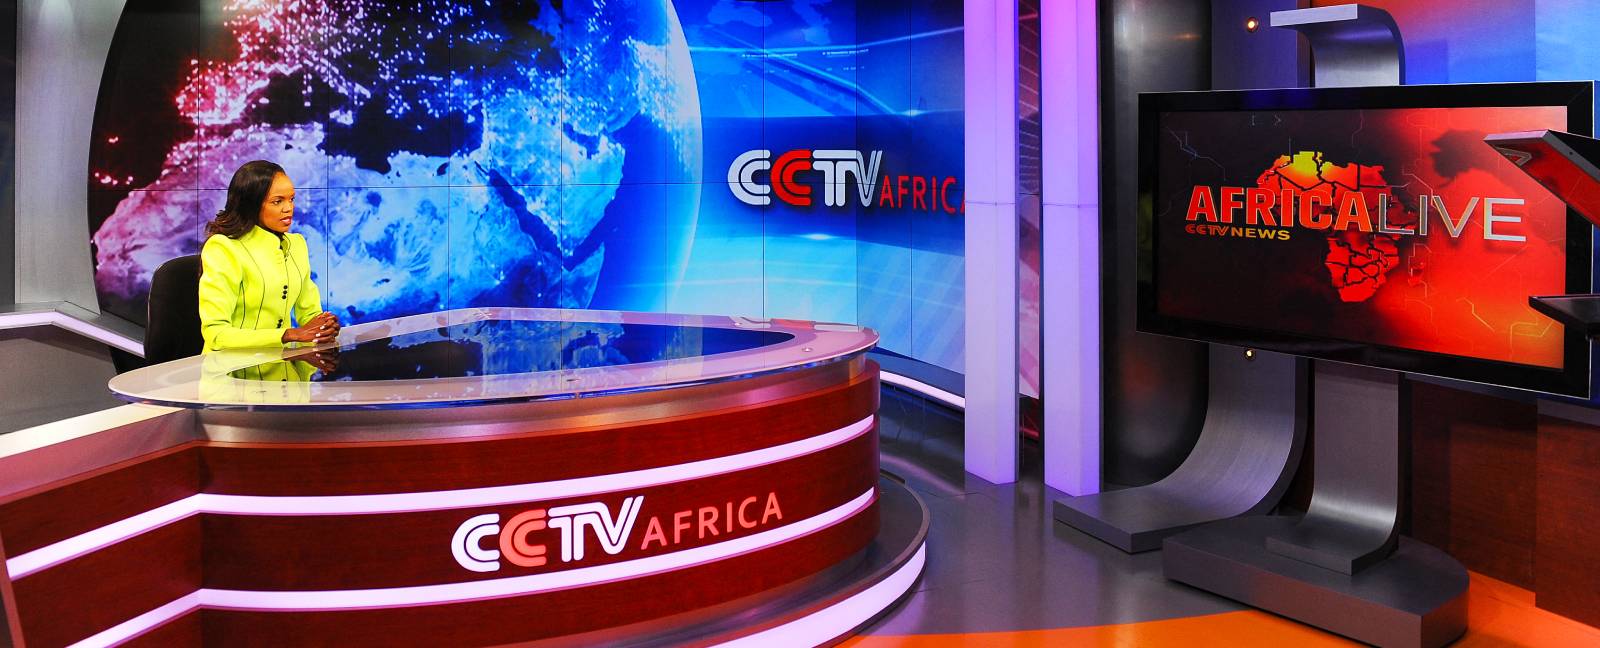 News presenter Beatrice Marshall at China Central Television (CCTV) Africa's studio in Nairobi.